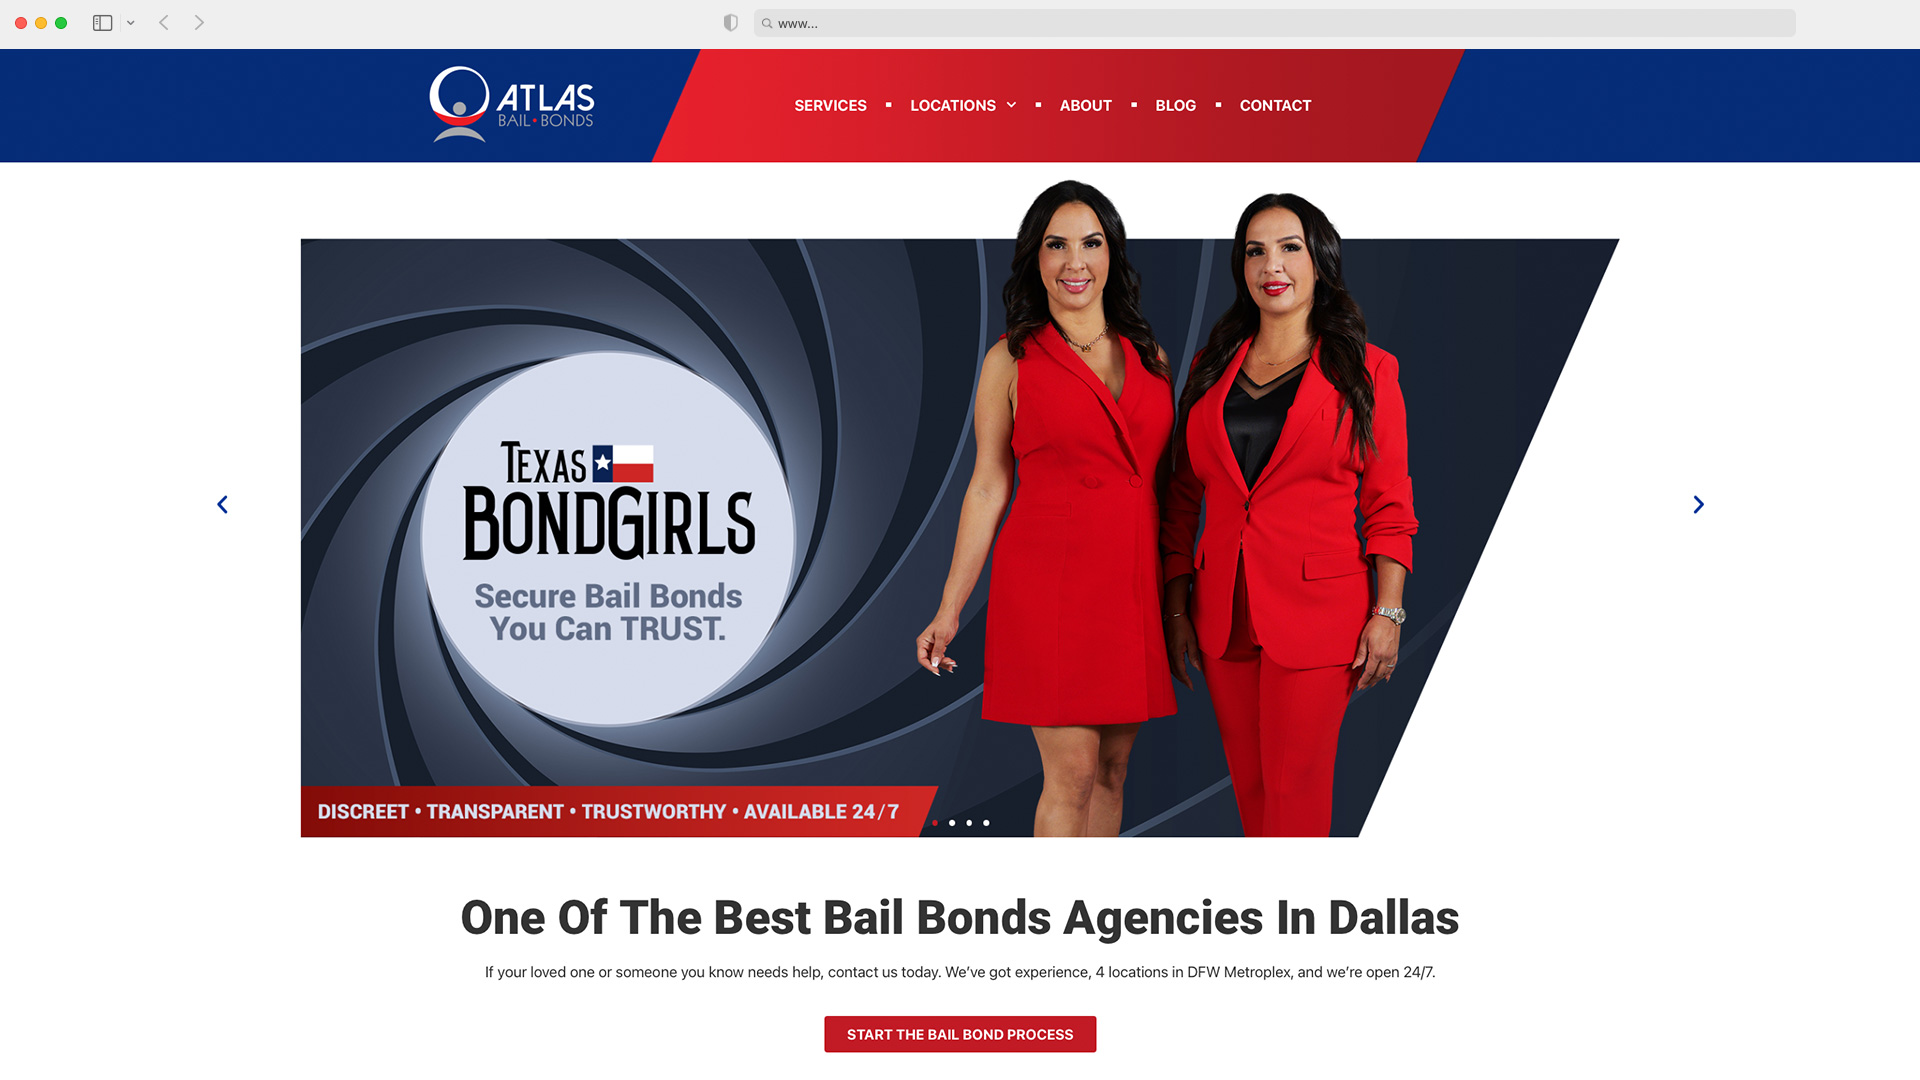 Atlas Bail Bonds - Website Design - Texas Bond Girls